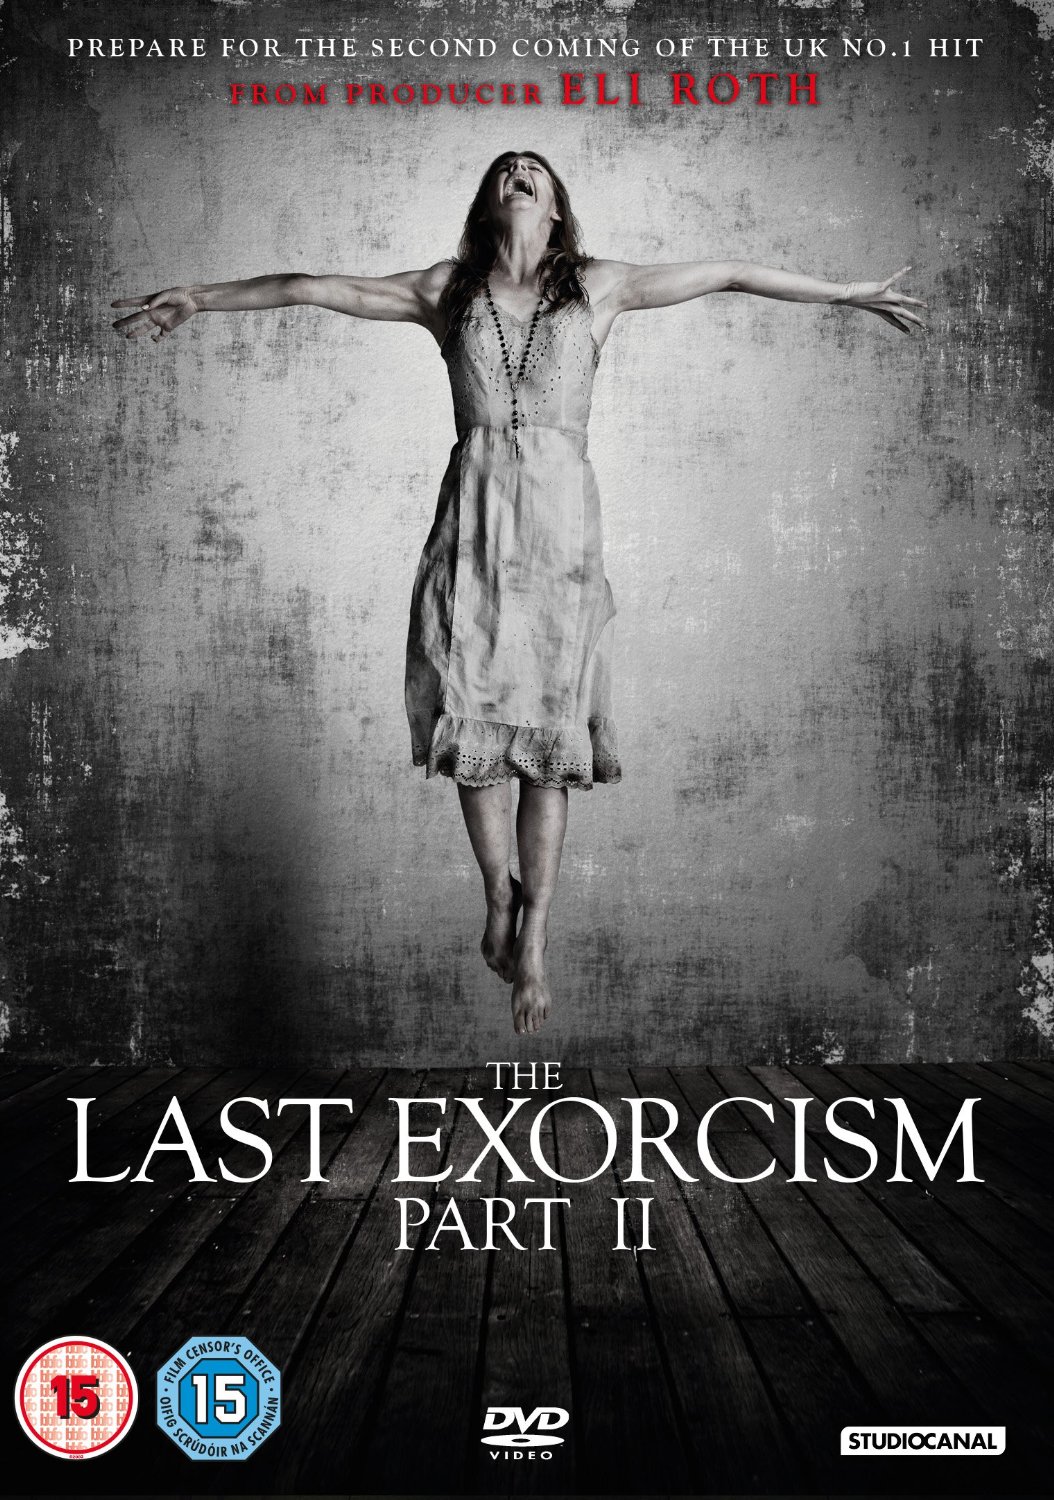 The Last Exorcism Part II Backgrounds, Compatible - PC, Mobile, Gadgets| 1054x1500 px